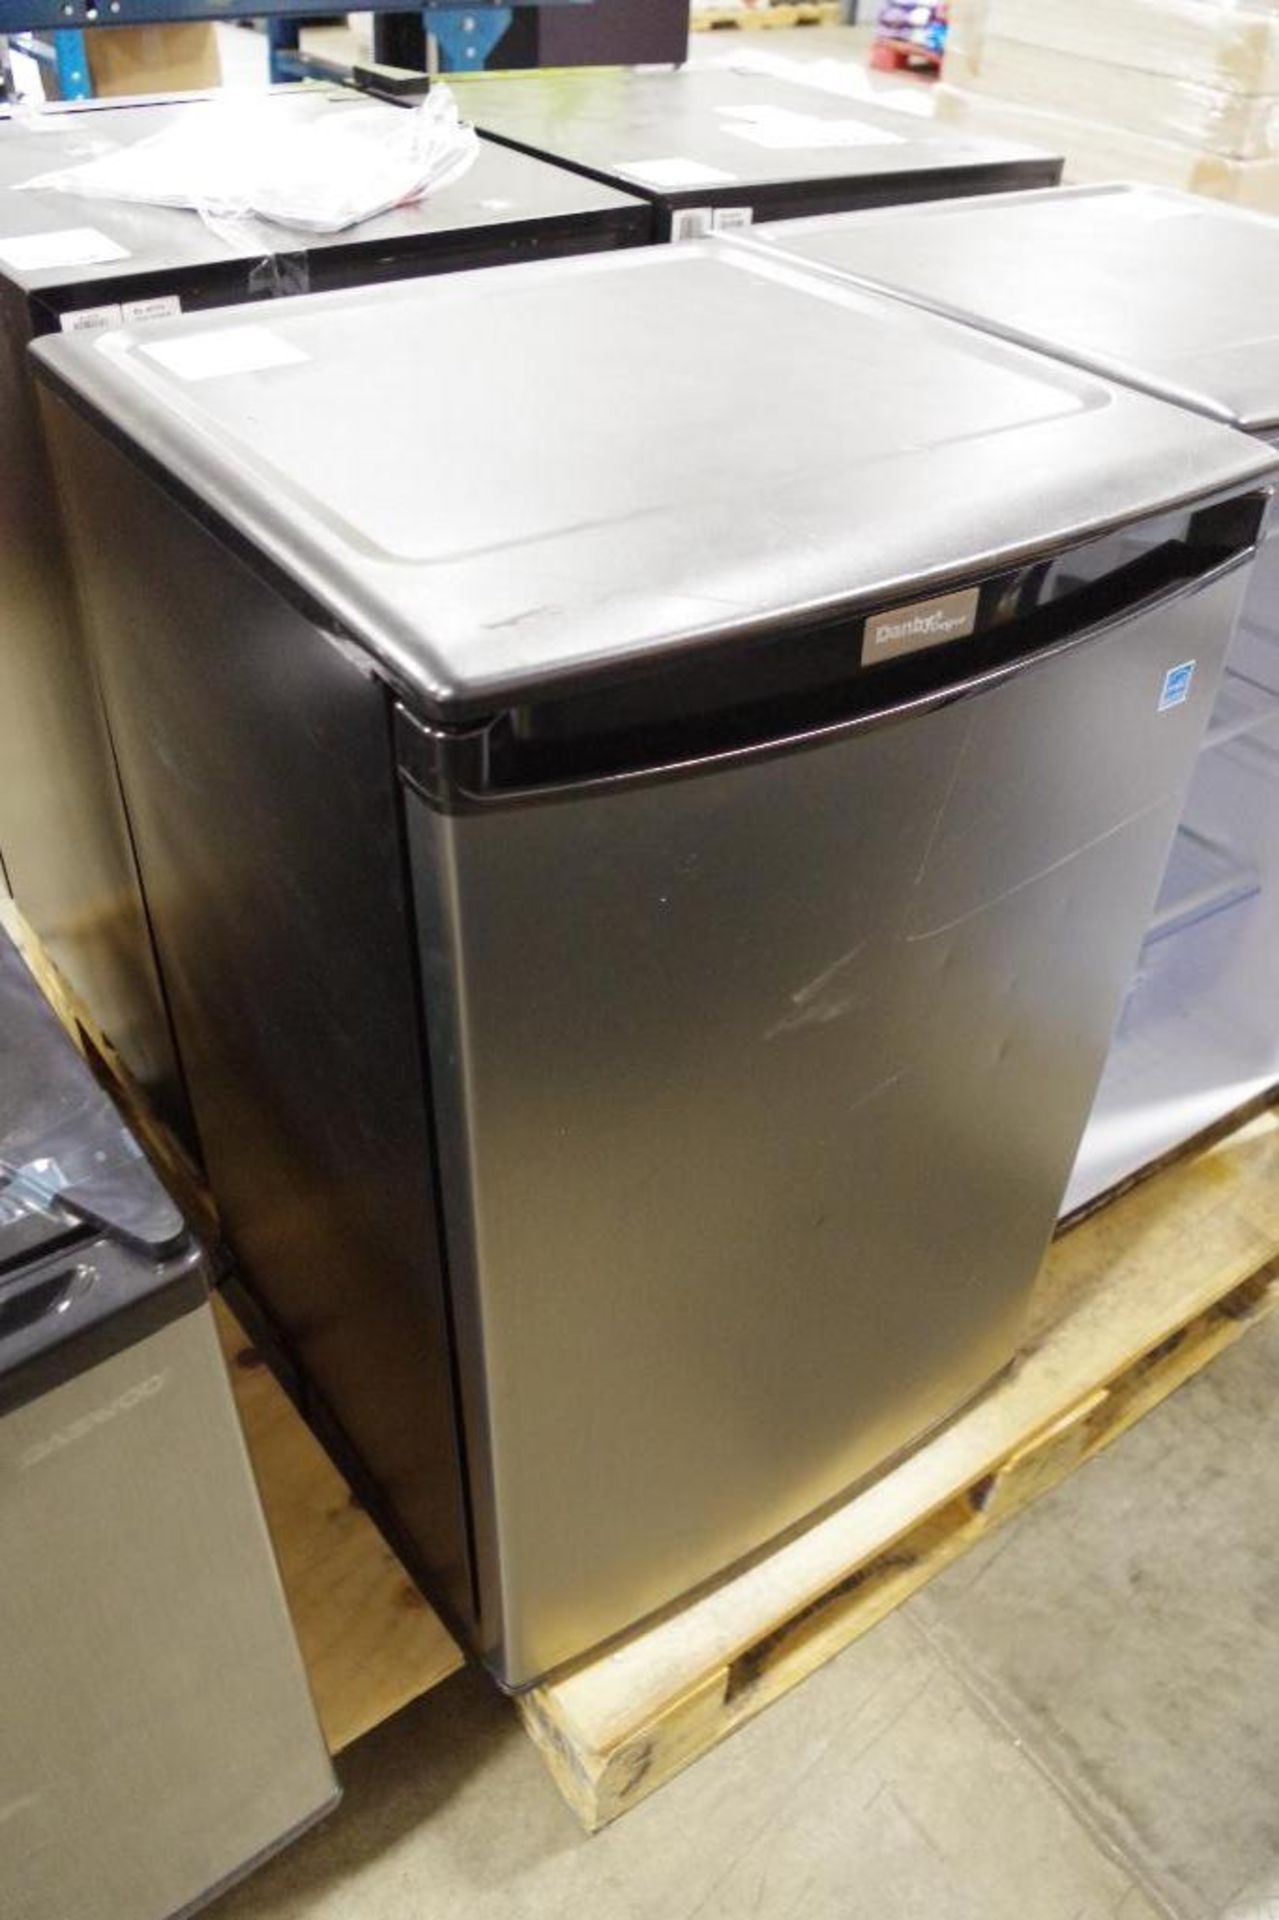 DANBY DESIGNER Compact Refrigerator M/N DAR044A4BSLDDU, Store Return, Powered On